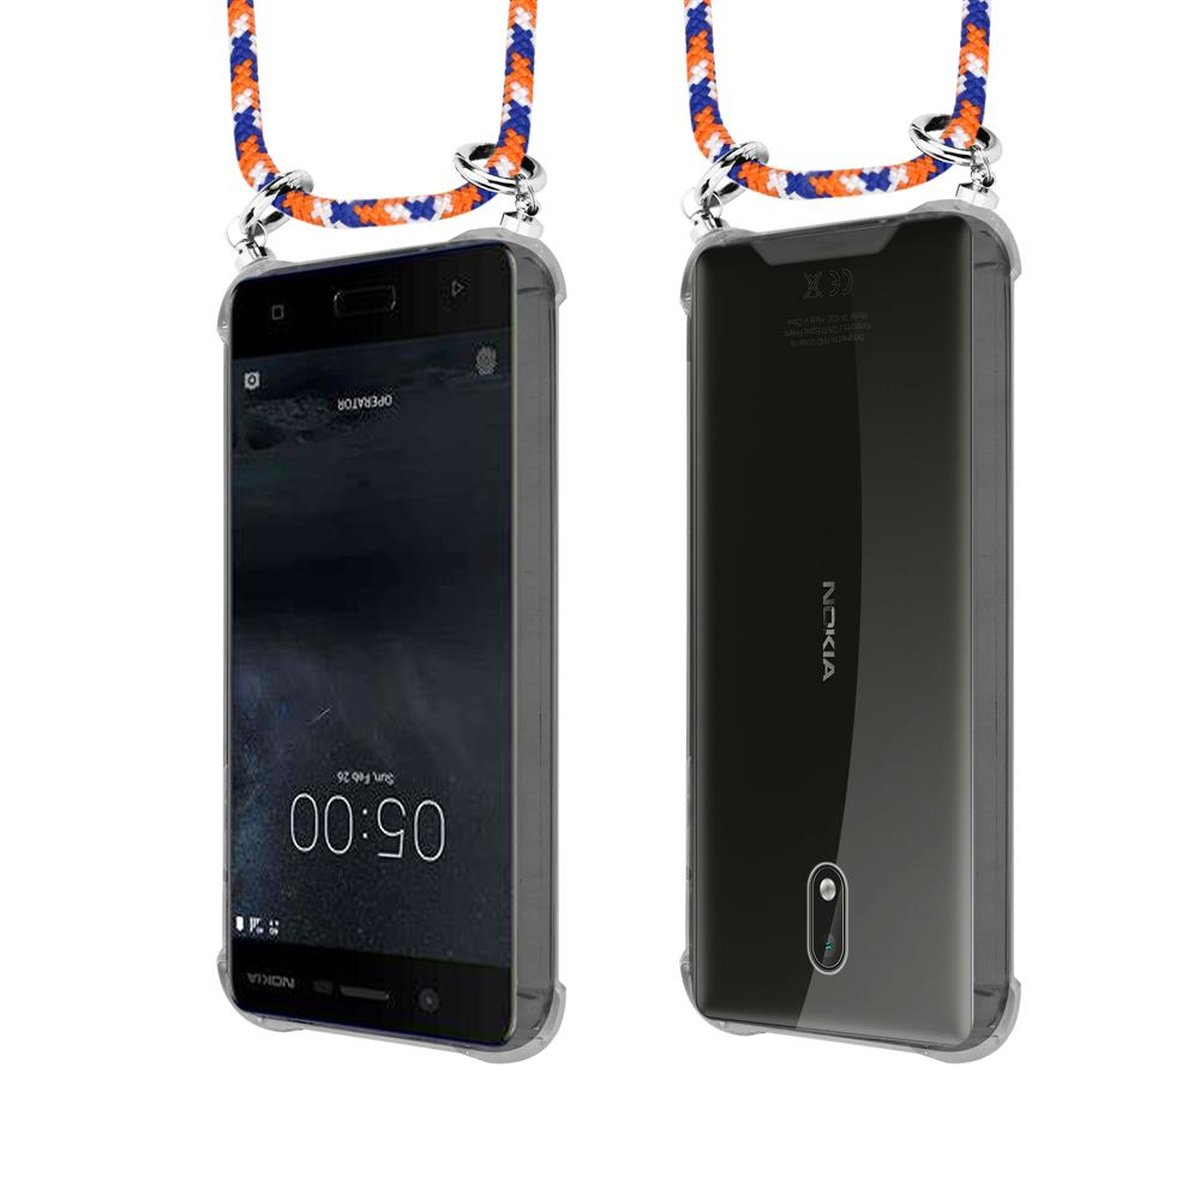 Nokia, Silber Backcover, mit Kette Kordel 3 Band WEIß abnehmbarer BLAU Ringen, CADORABO 2017, und Handy ORANGE Hülle,